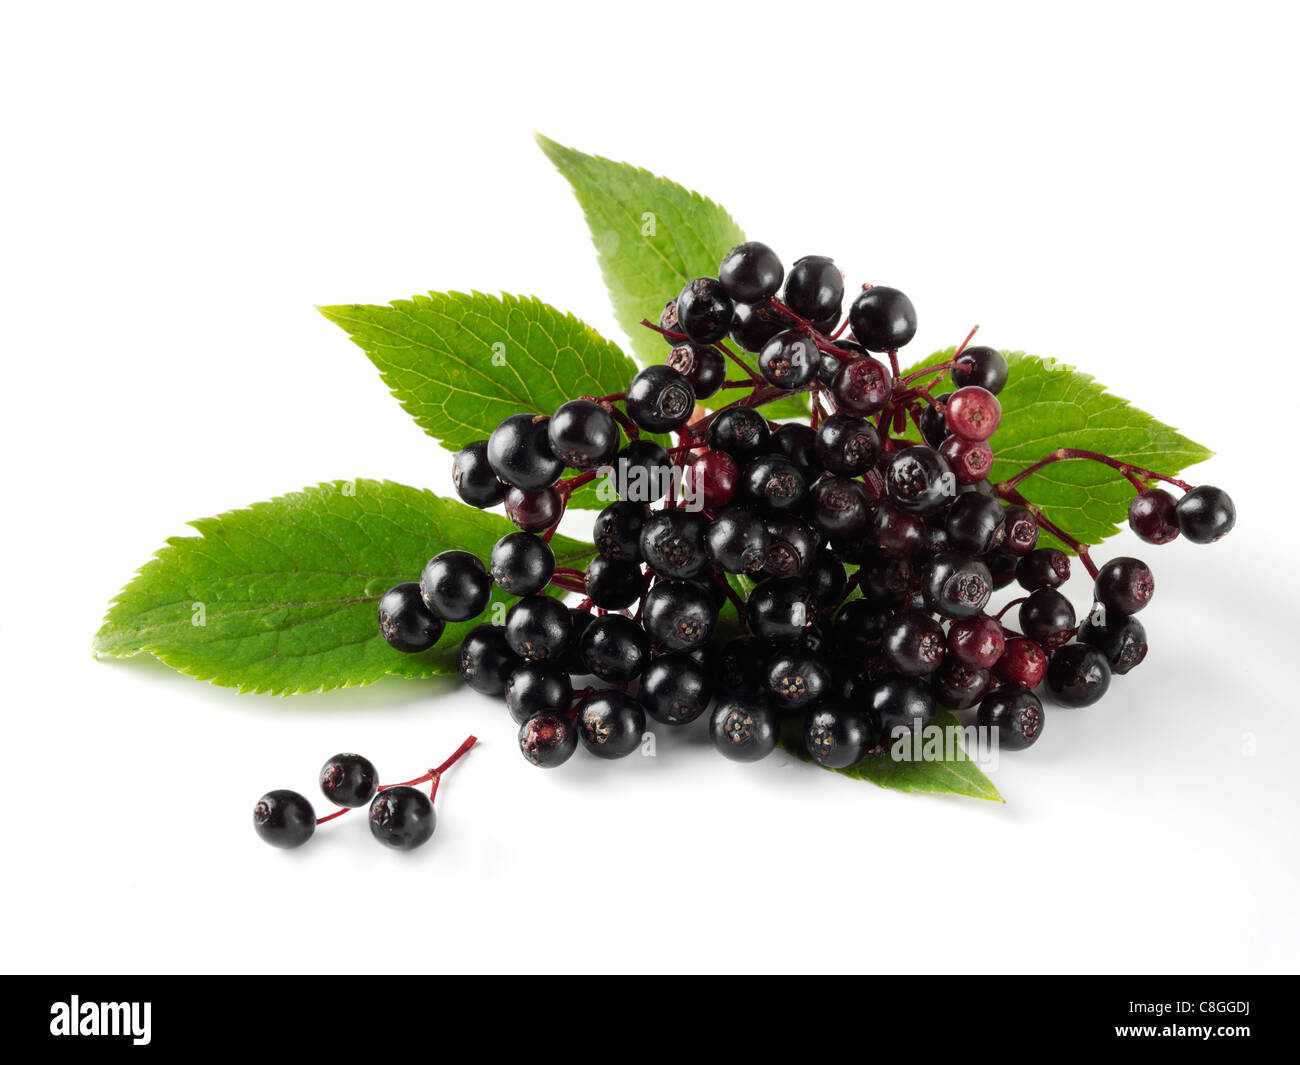 Fresh picked elder or elderberry berries fruit with leaves (Sambucus) against a white background Stock Photo